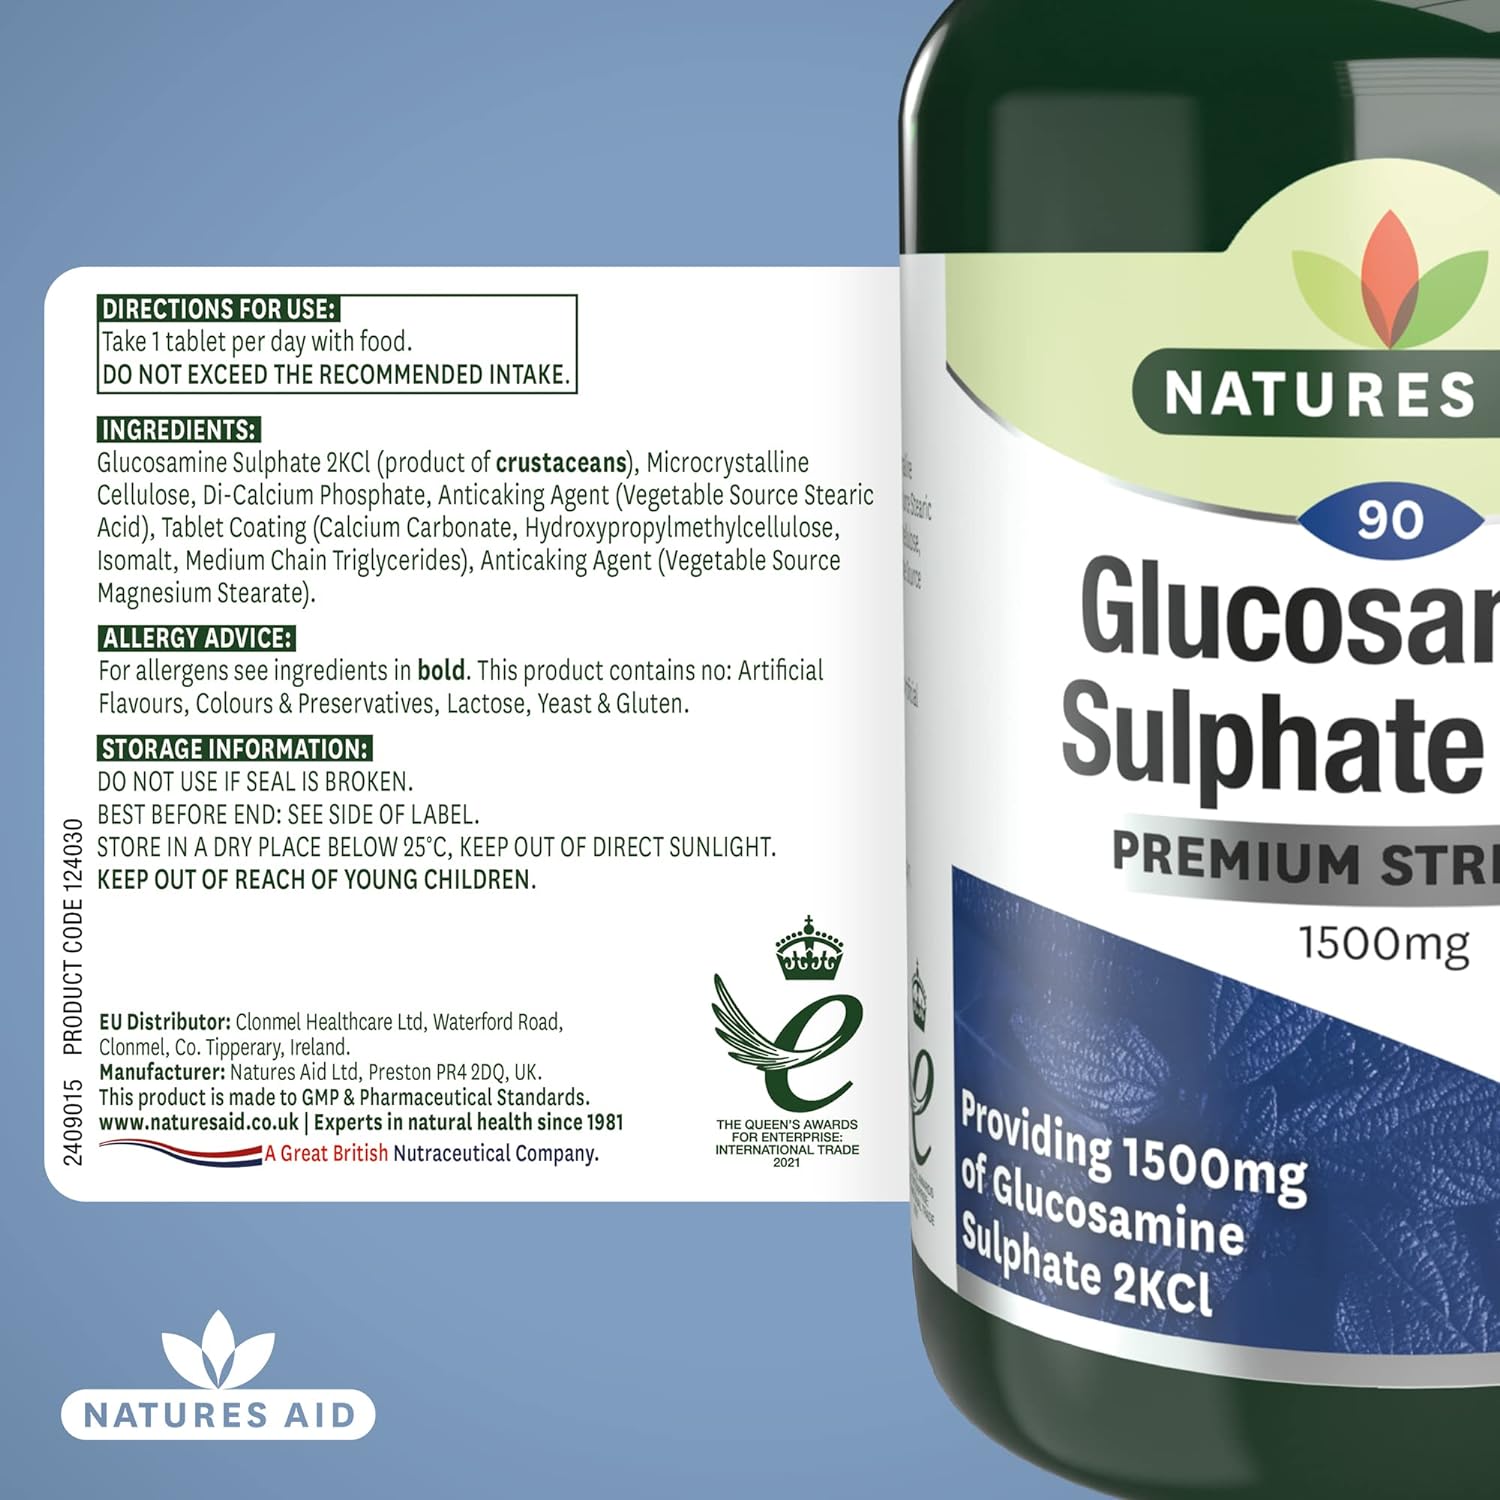 Glucosamine Sulphate 2KCI 1500mg High Strength 90 Tablets